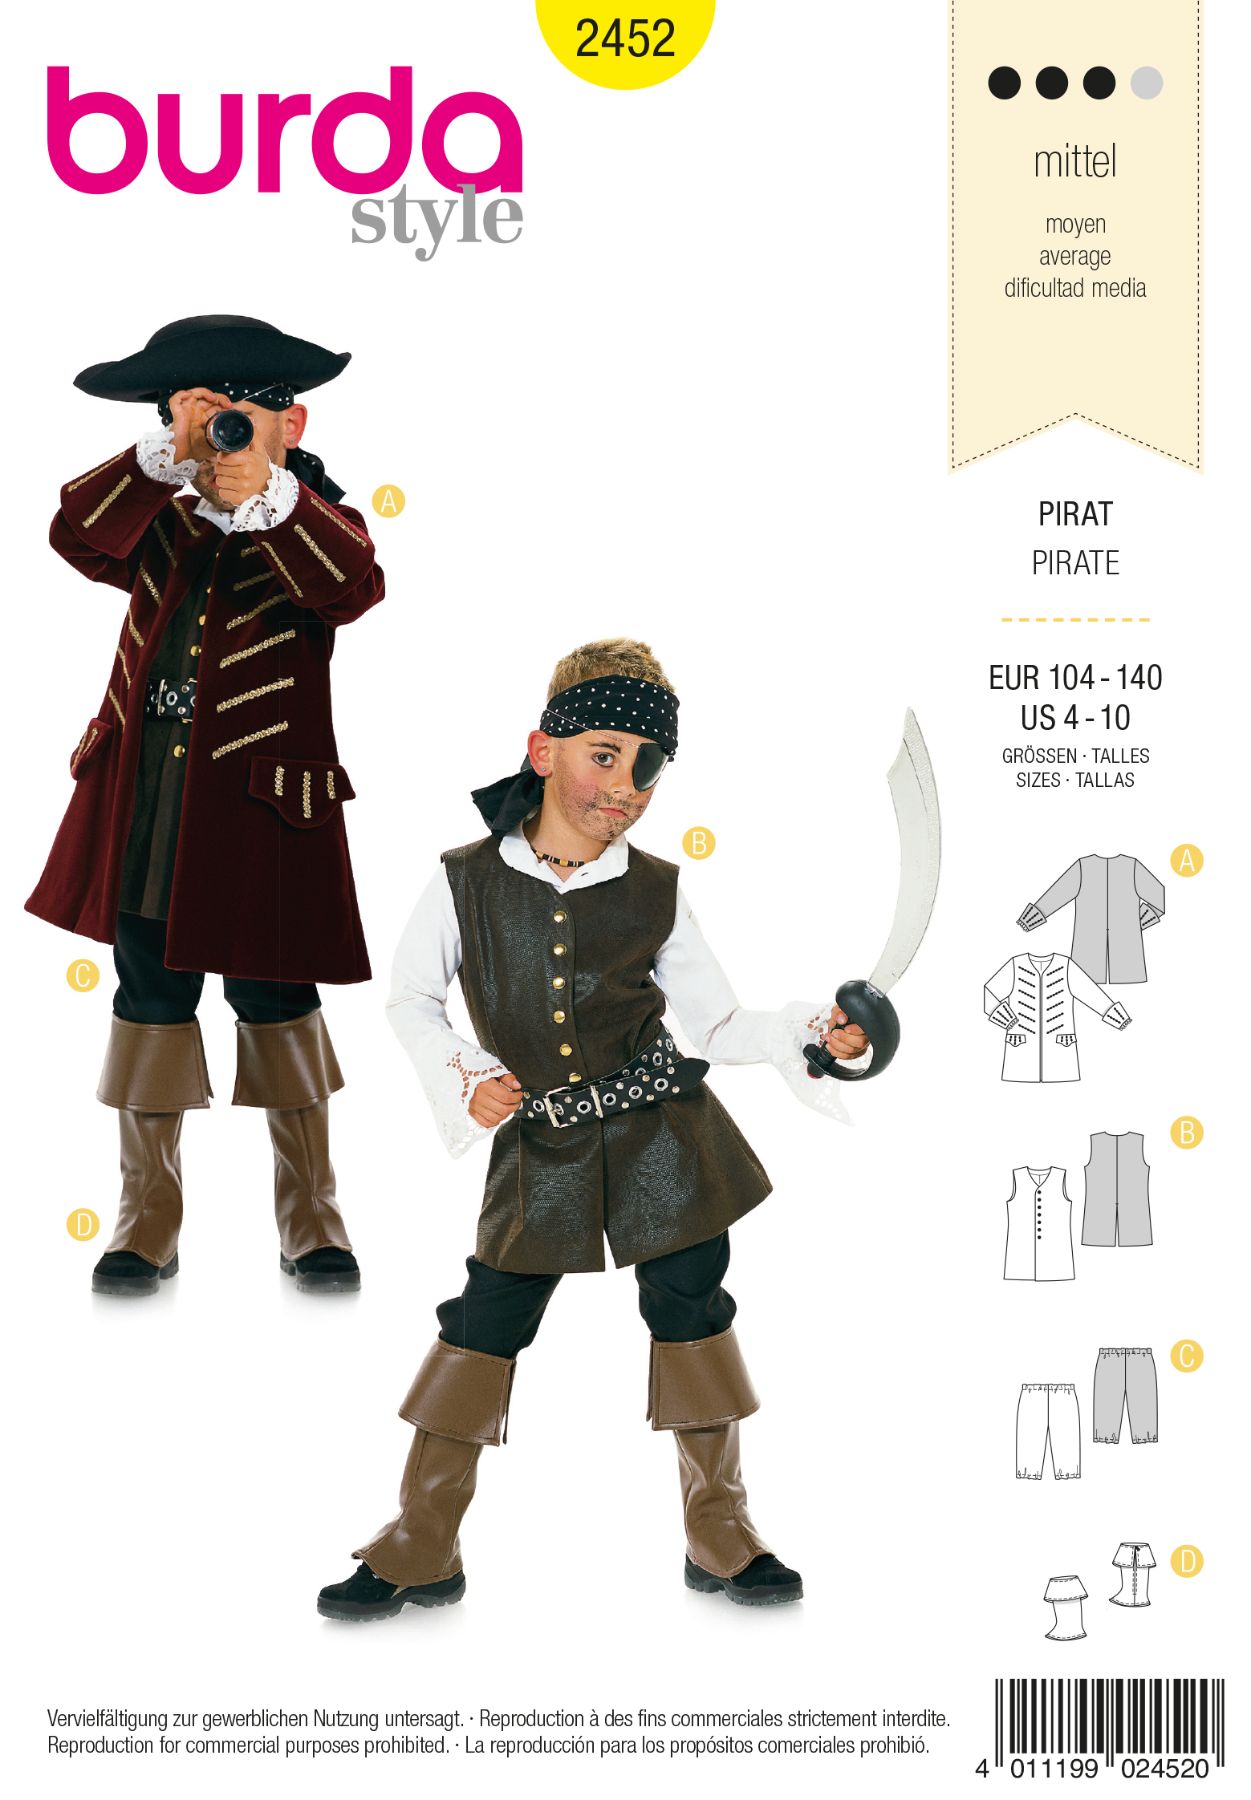 Burda Geel 2452 - Piraten kostuum